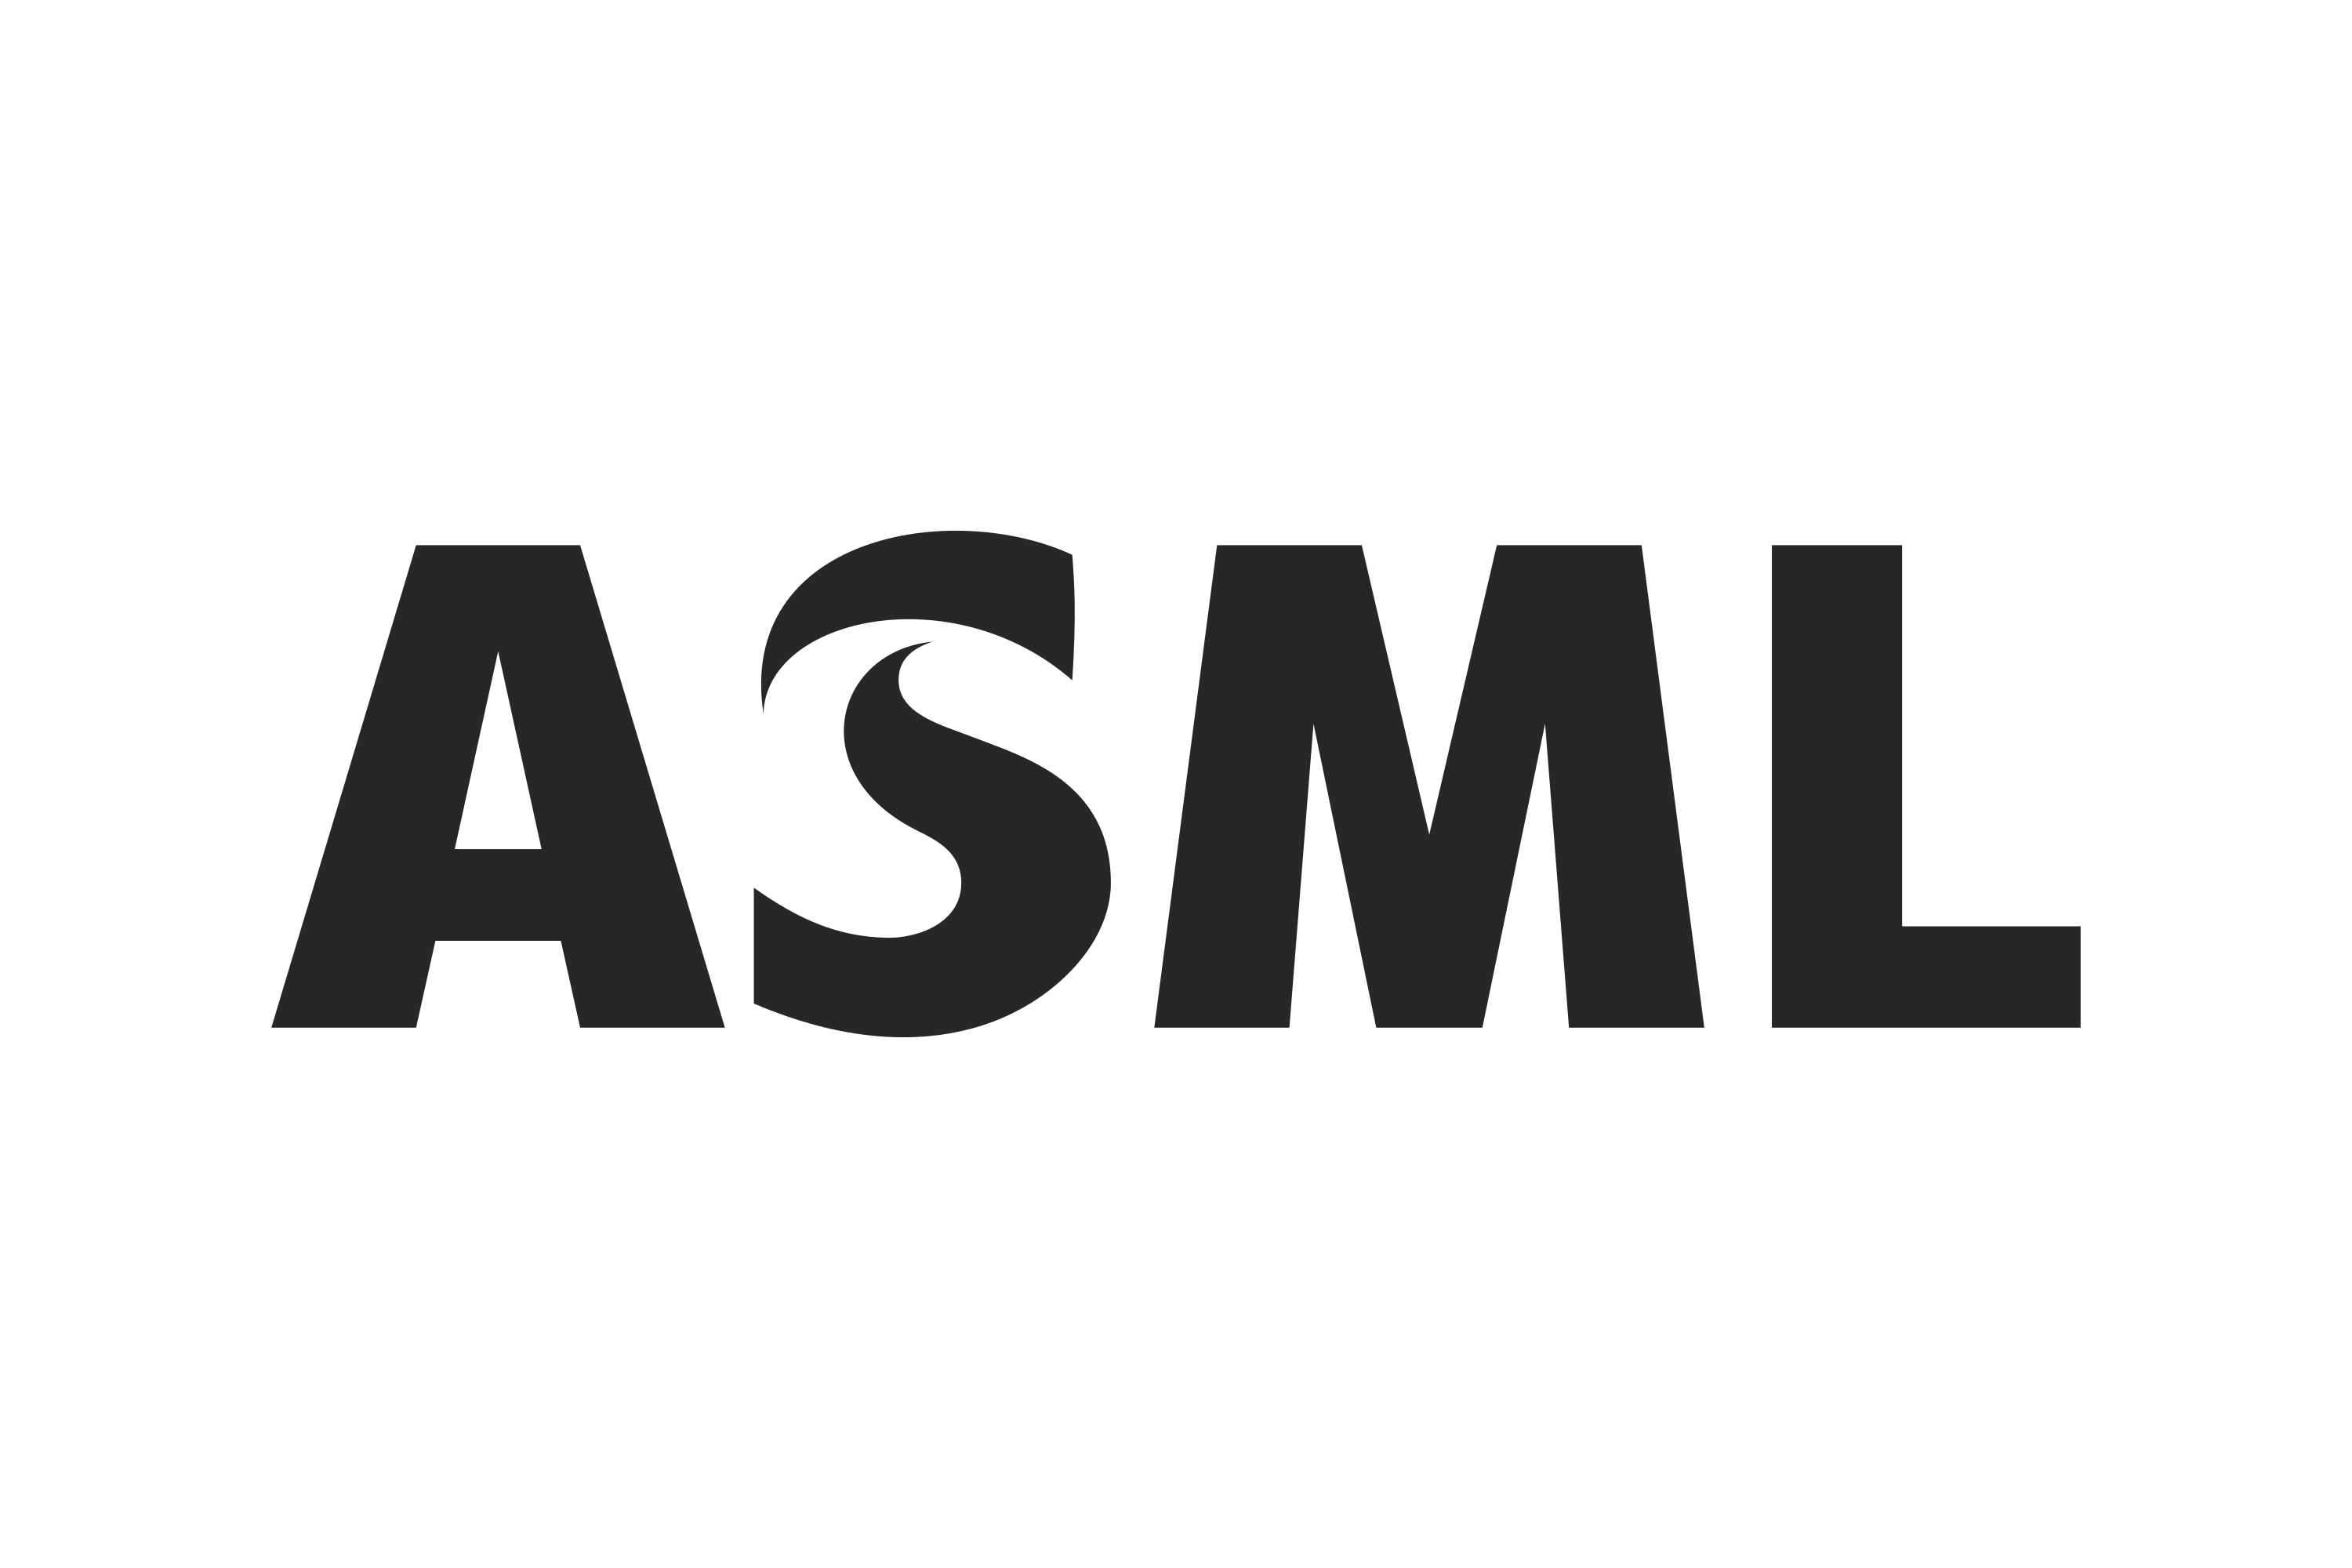 asml-logo